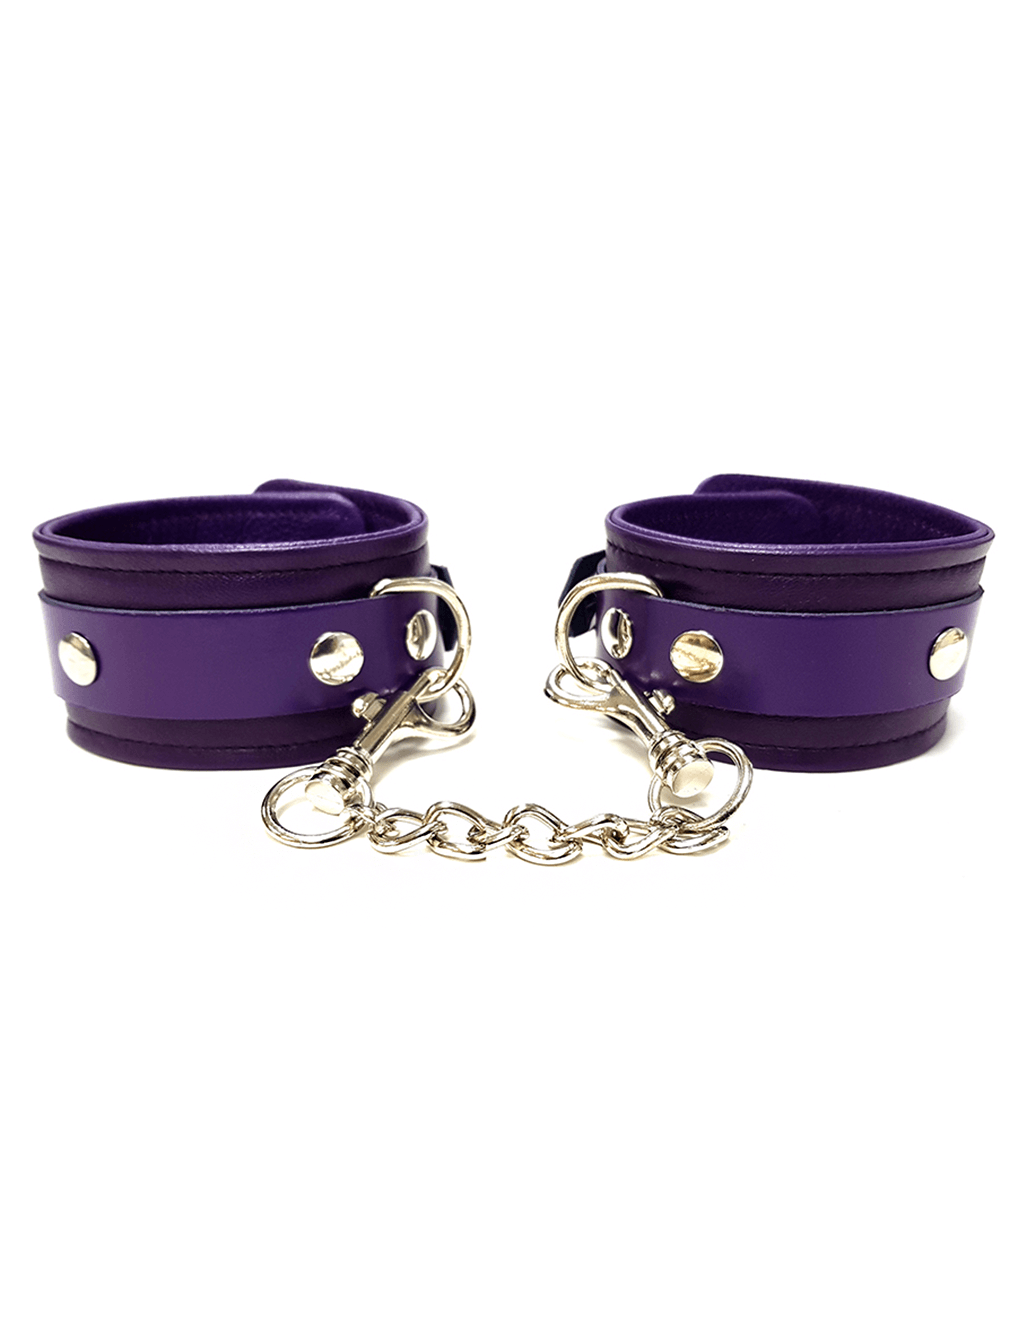 Rouge Leather Wrist Cuffs - Purple - Main